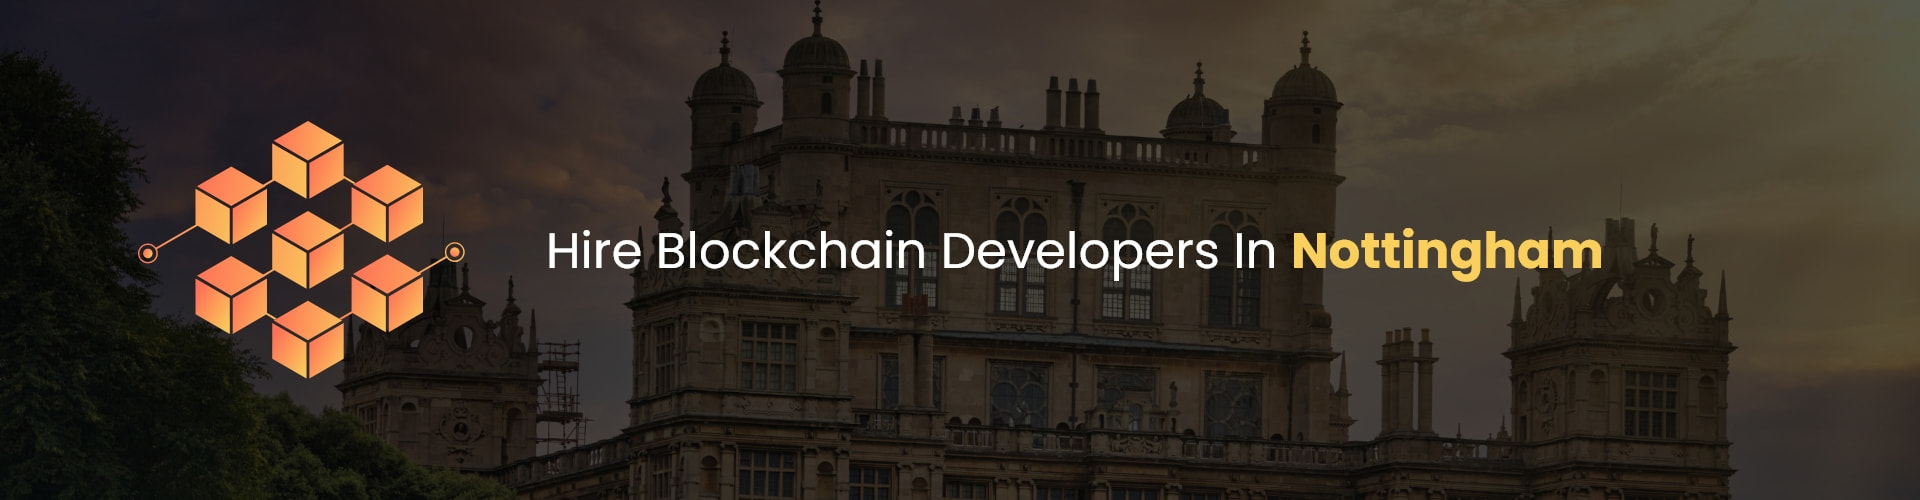 hire blockchain developers in nottingham